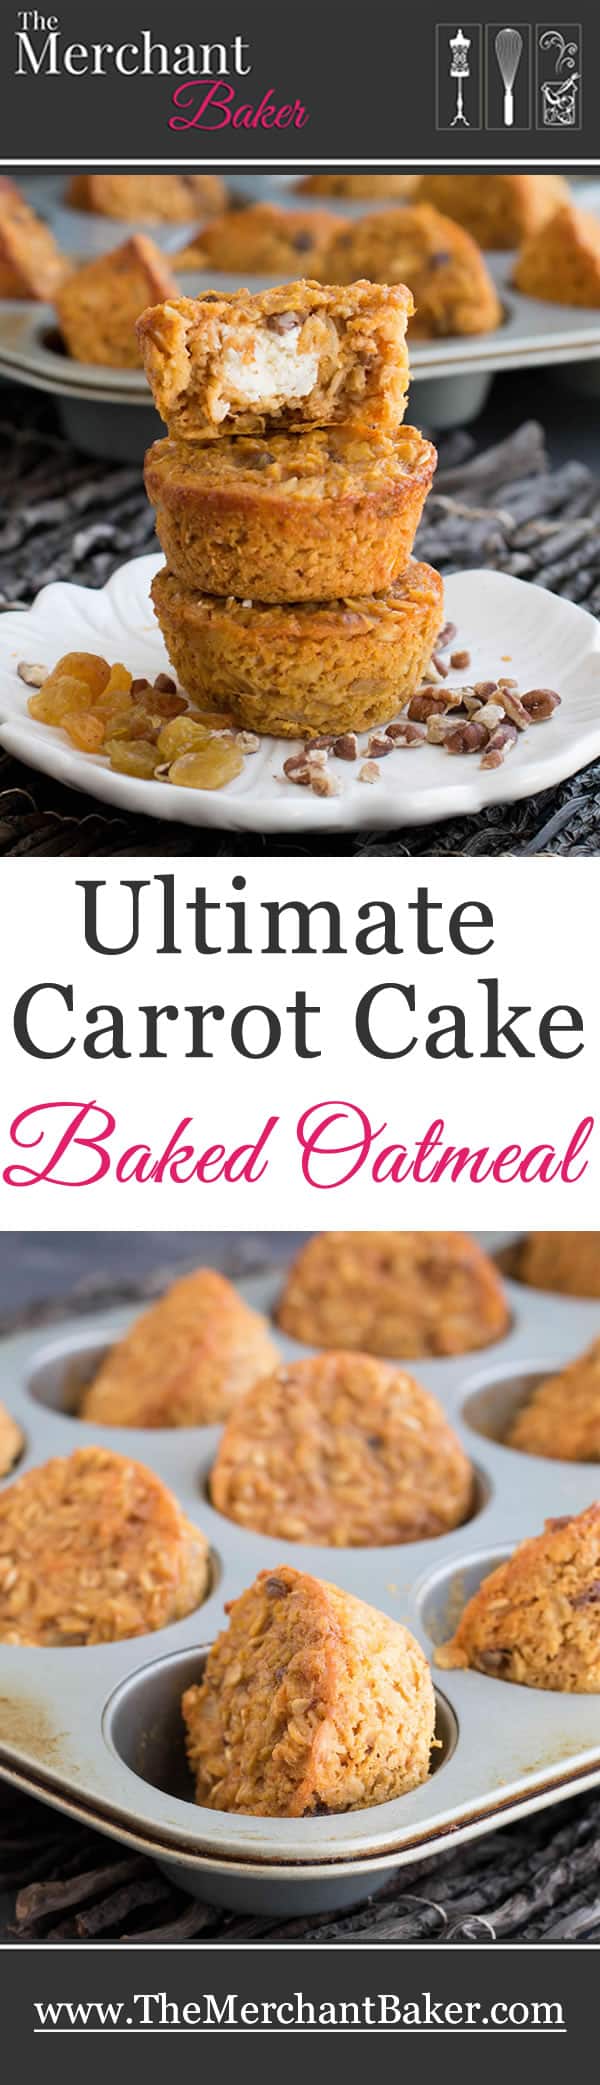 Ultimate Carrot Cake Baked Oatmeal